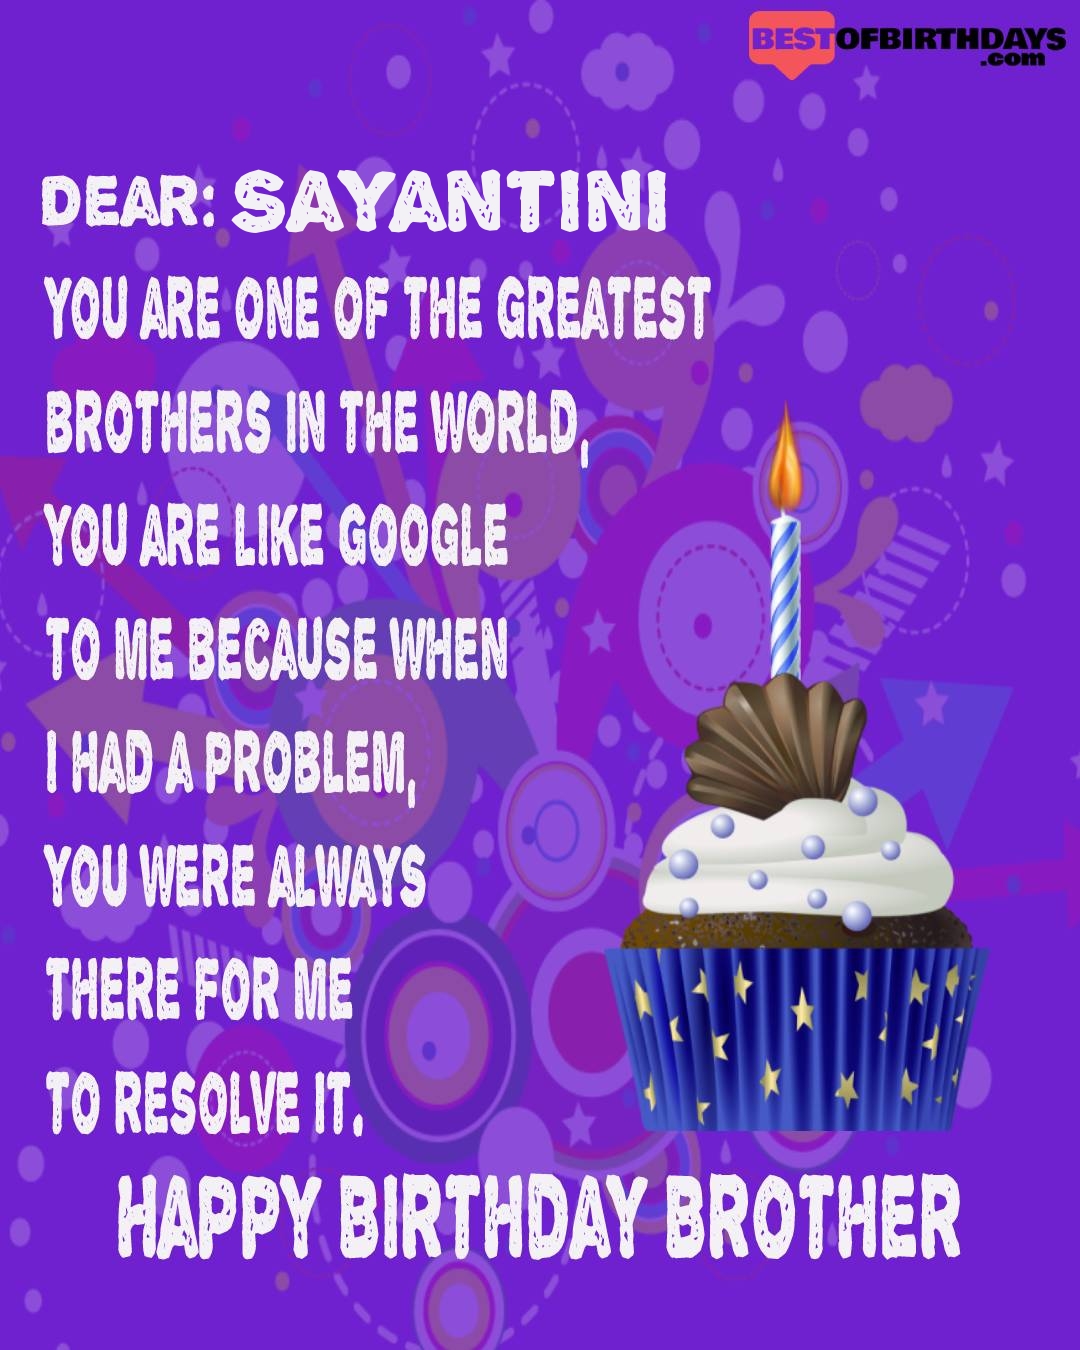 Happy birthday sayantini bhai brother bro